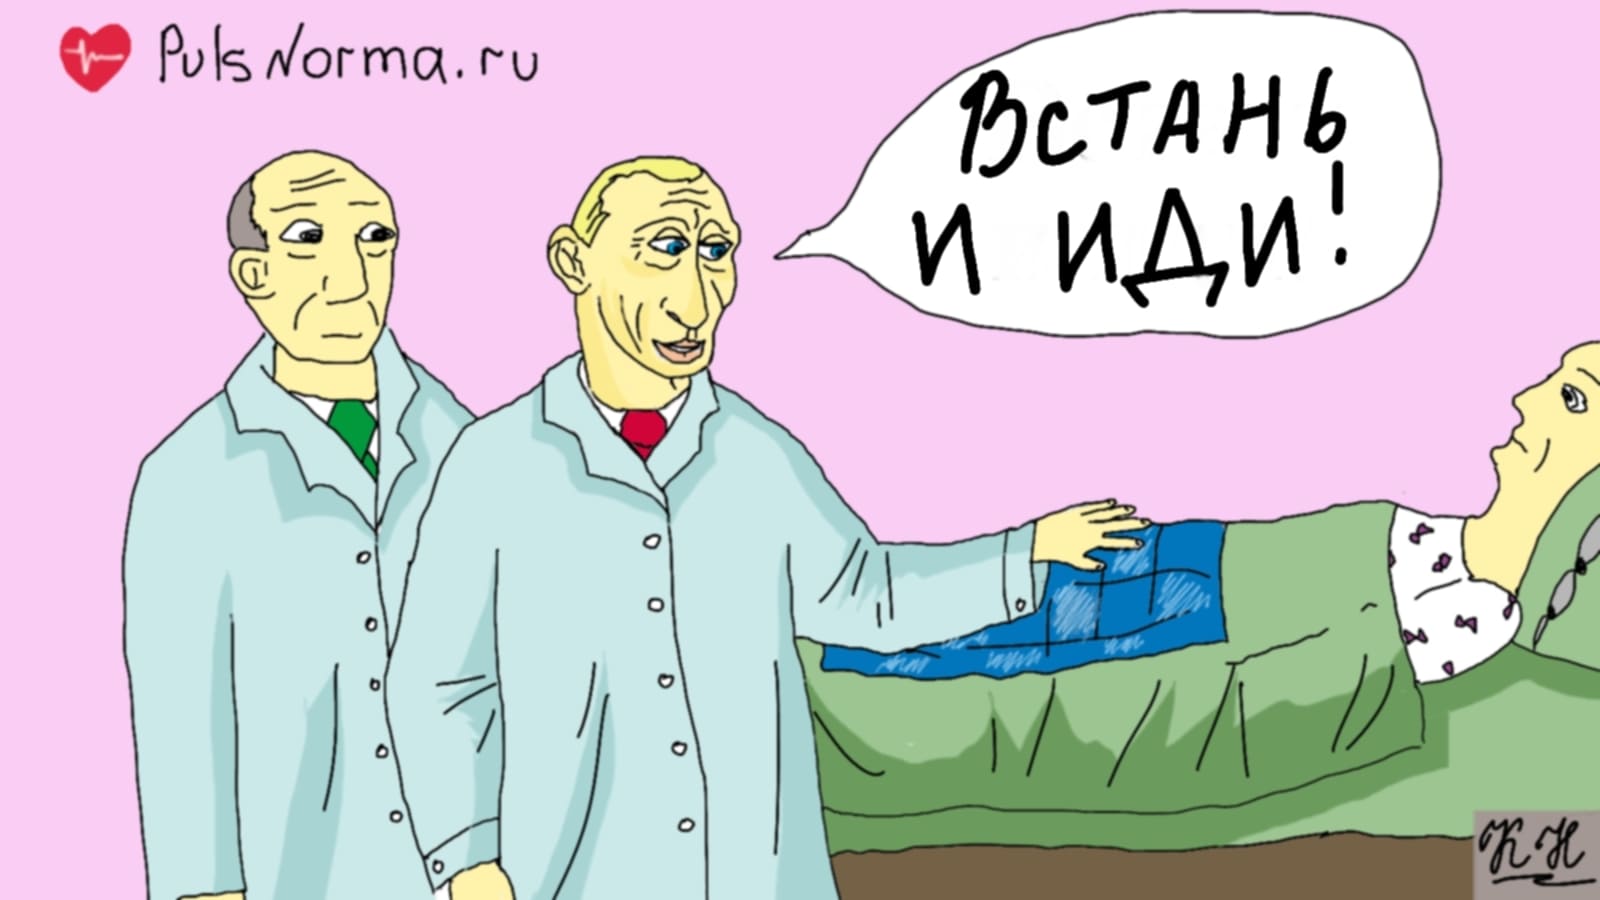 Пульс Норма: Картинка про президента Путина